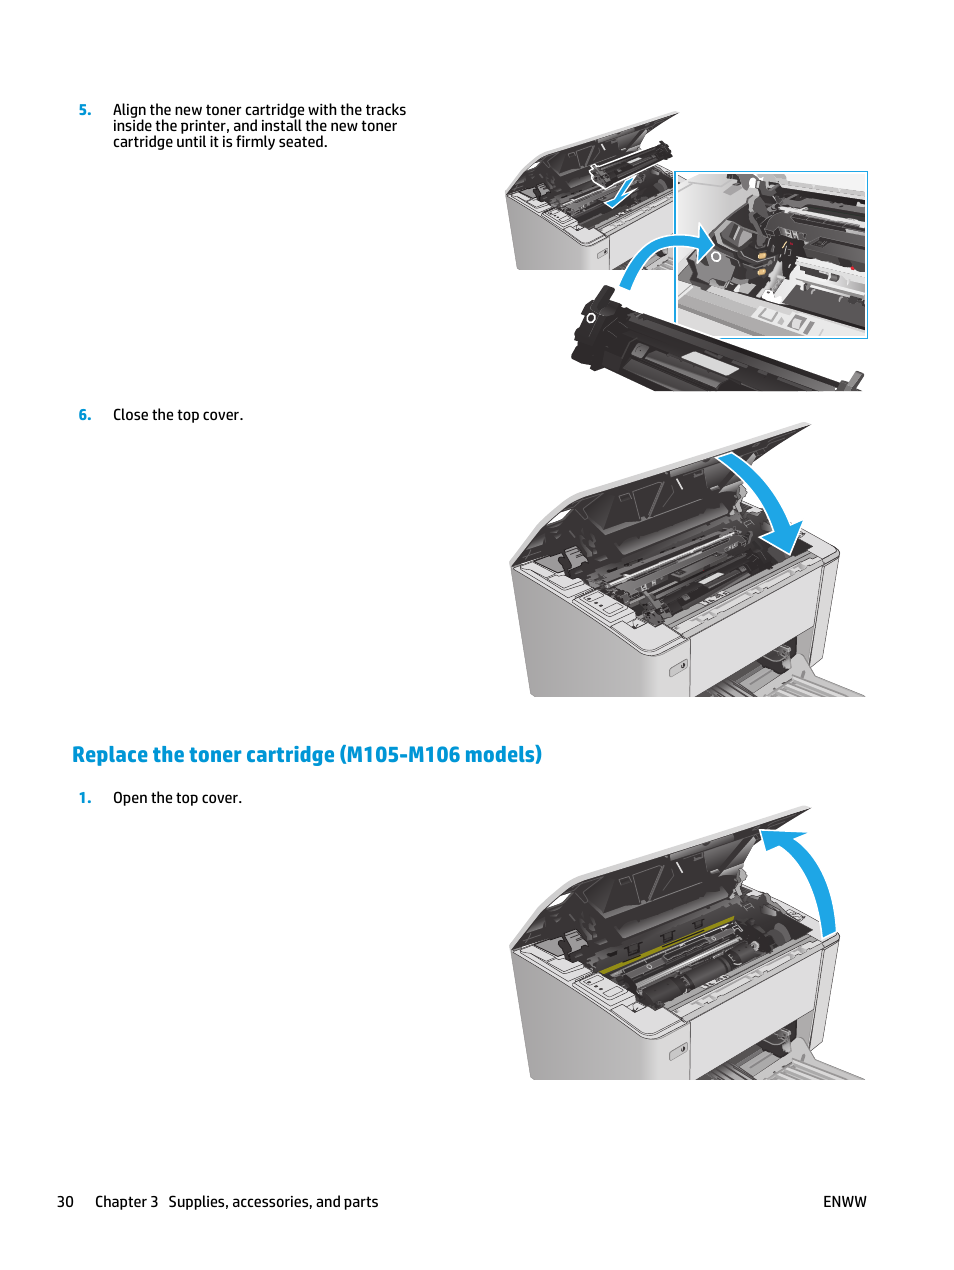 Replace the toner cartridge (m105-m106 models) | HP LaserJet Ultra M106w  User Manual | Page 40 / 110